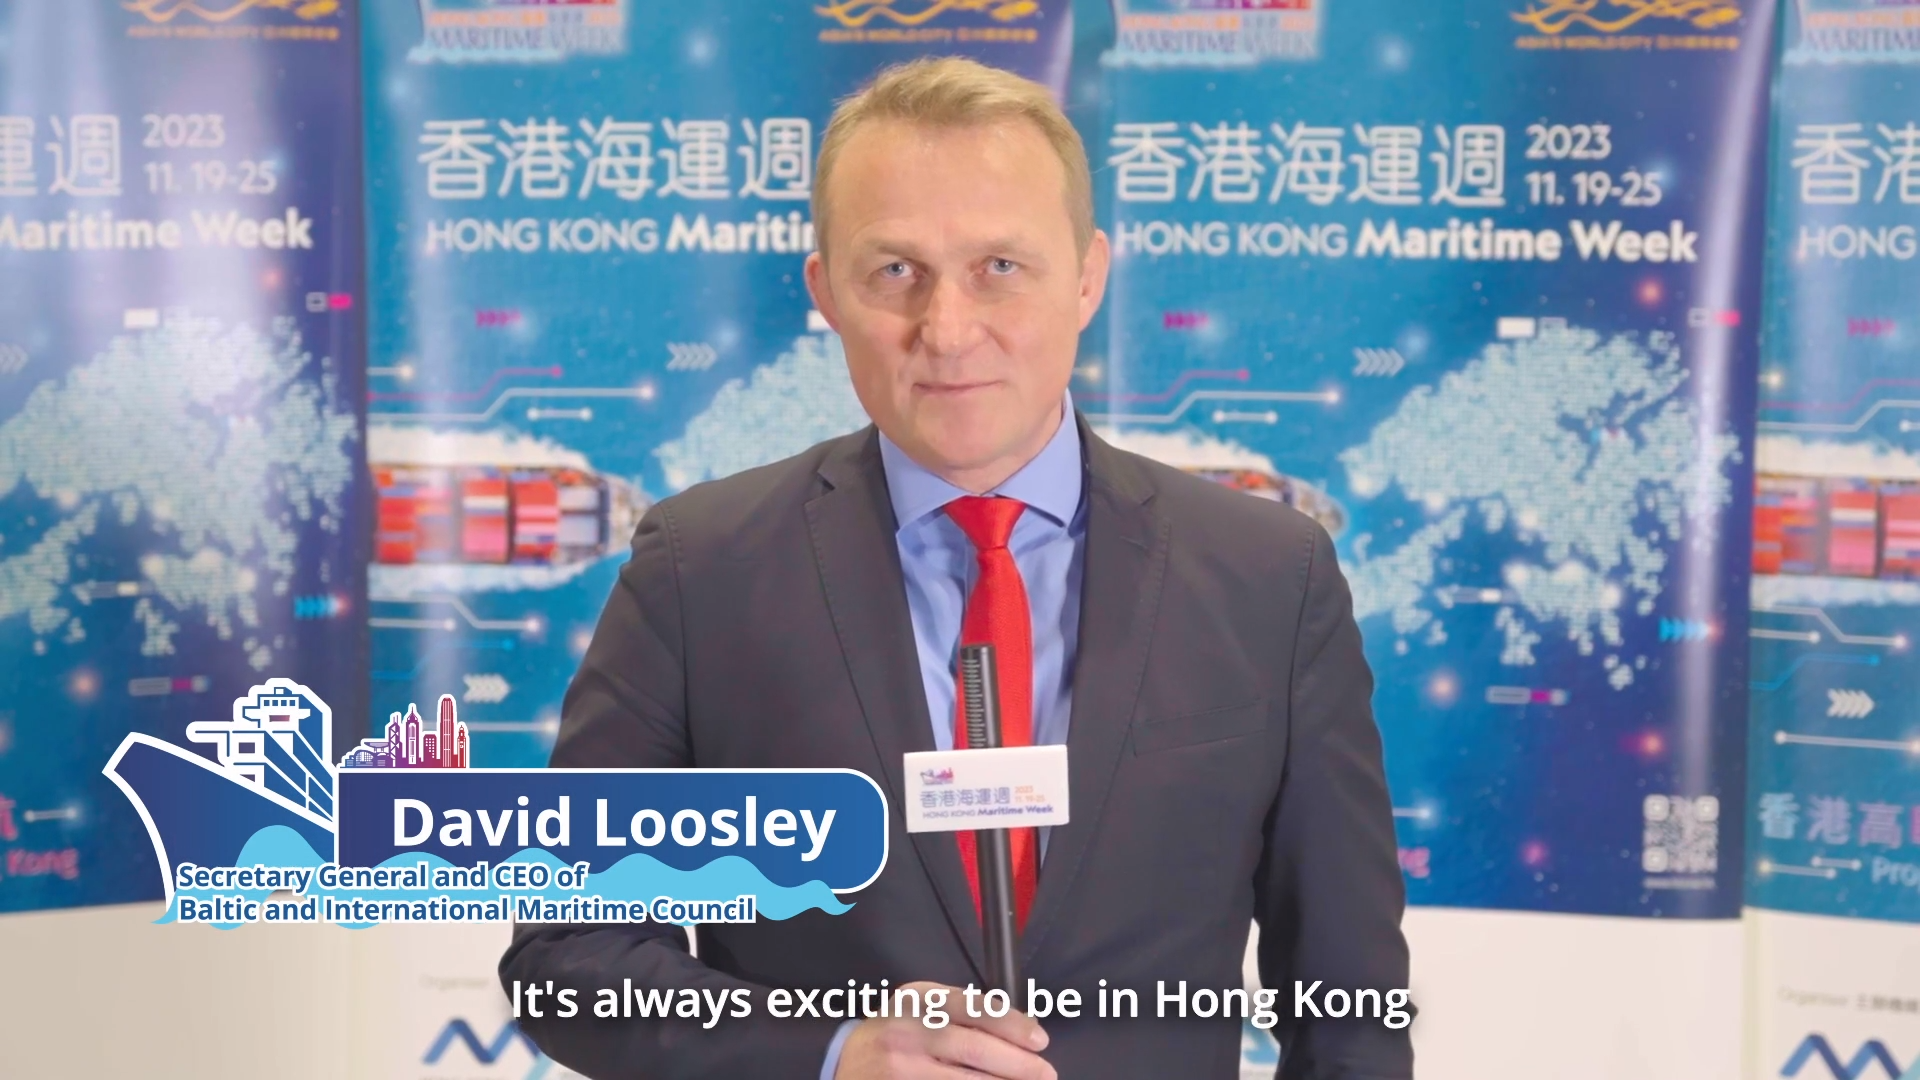 Hong Kong Maritime Week 2023 - Highlights from Mr David Loosley, Secretary General and CEO of Baltic and International Maritime Council